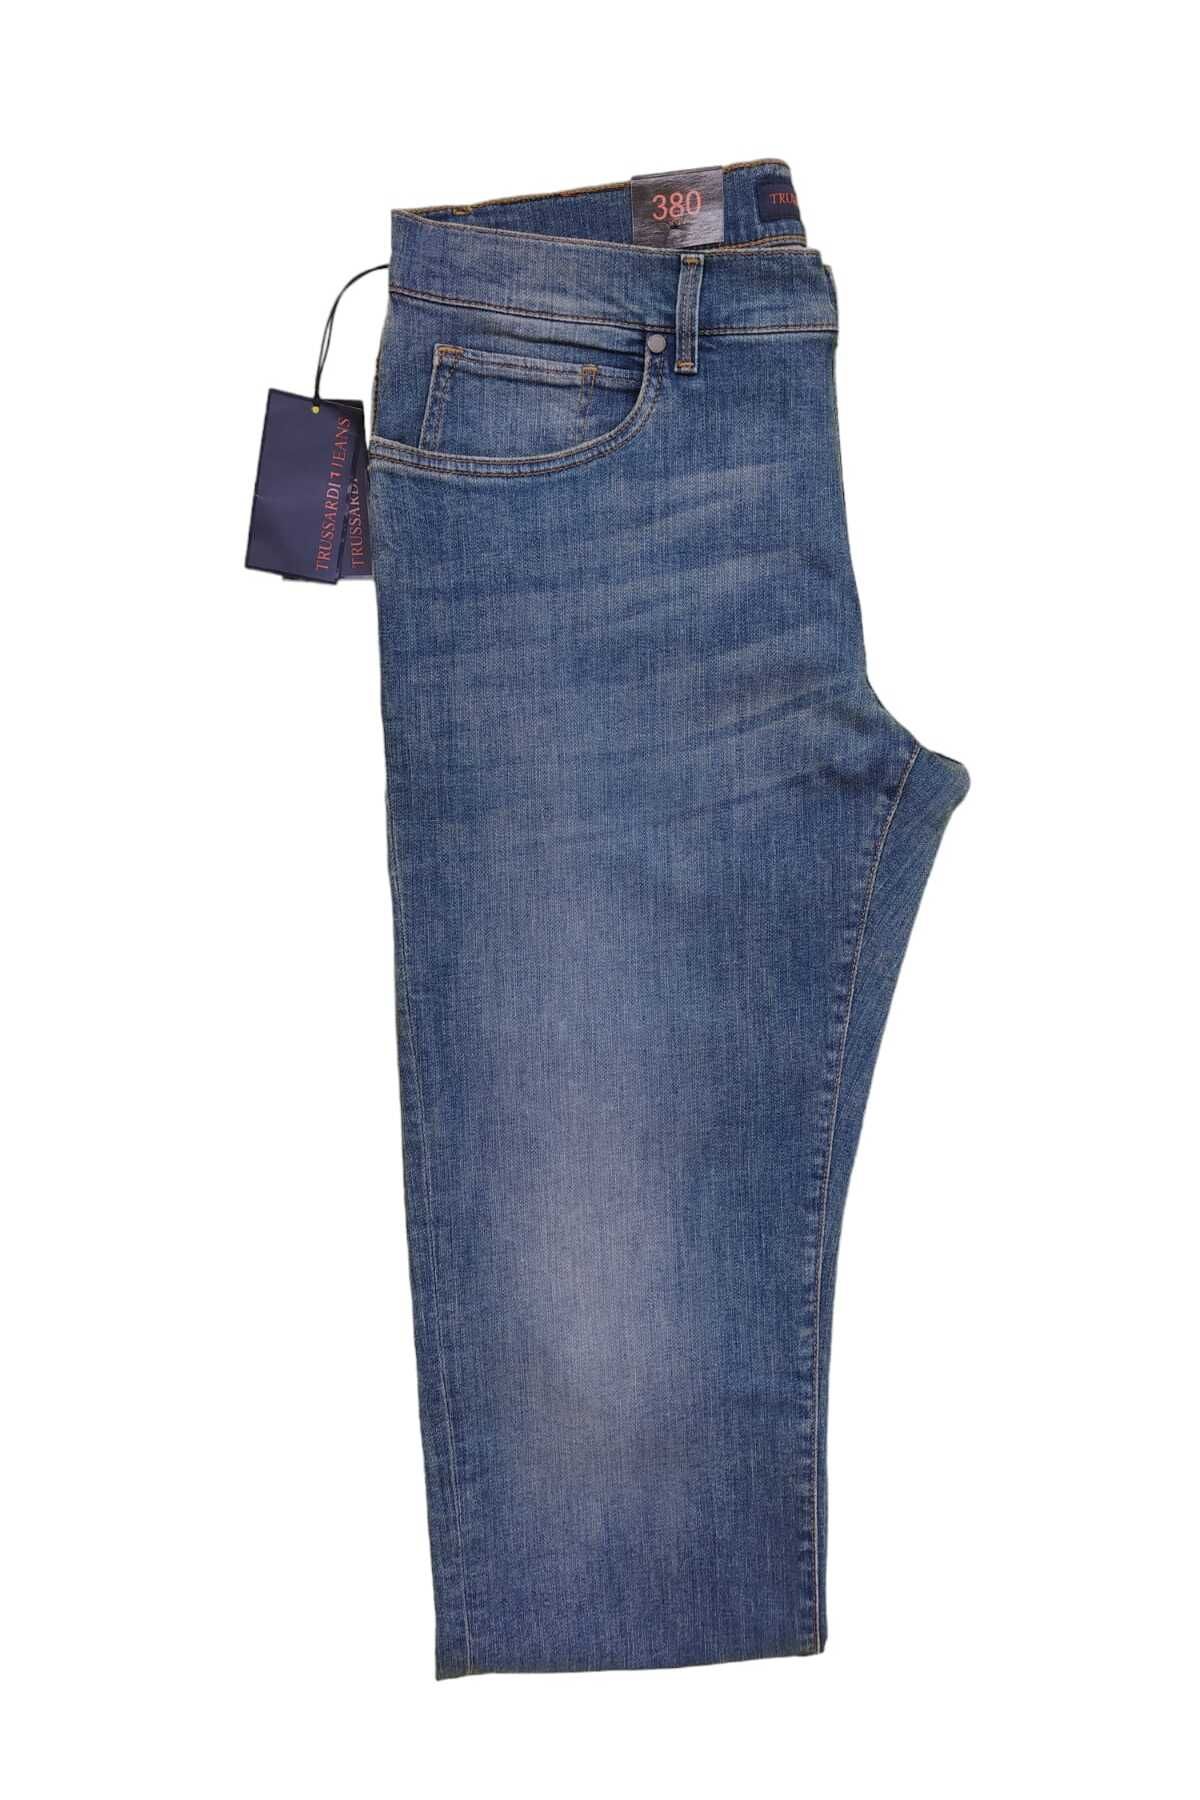 Trussardi Jeans 380 icon